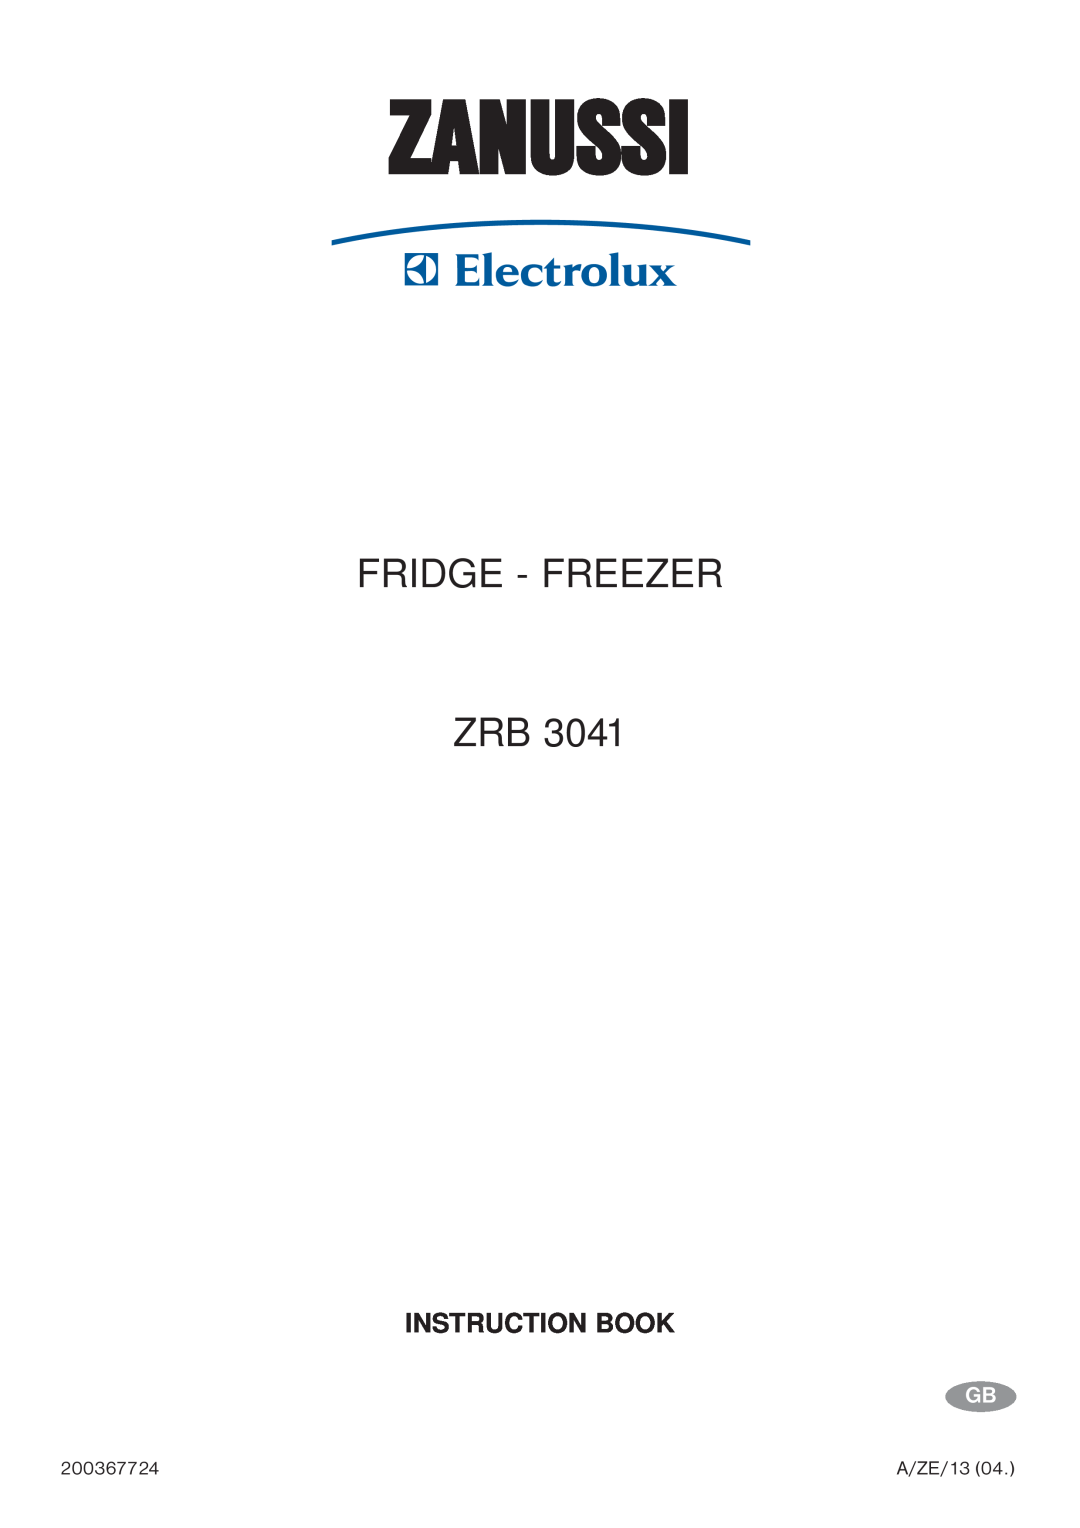 Zanussi ZRB 3041 manual Instruction Book, Zanussi, Fridge - Freezer Zrb 